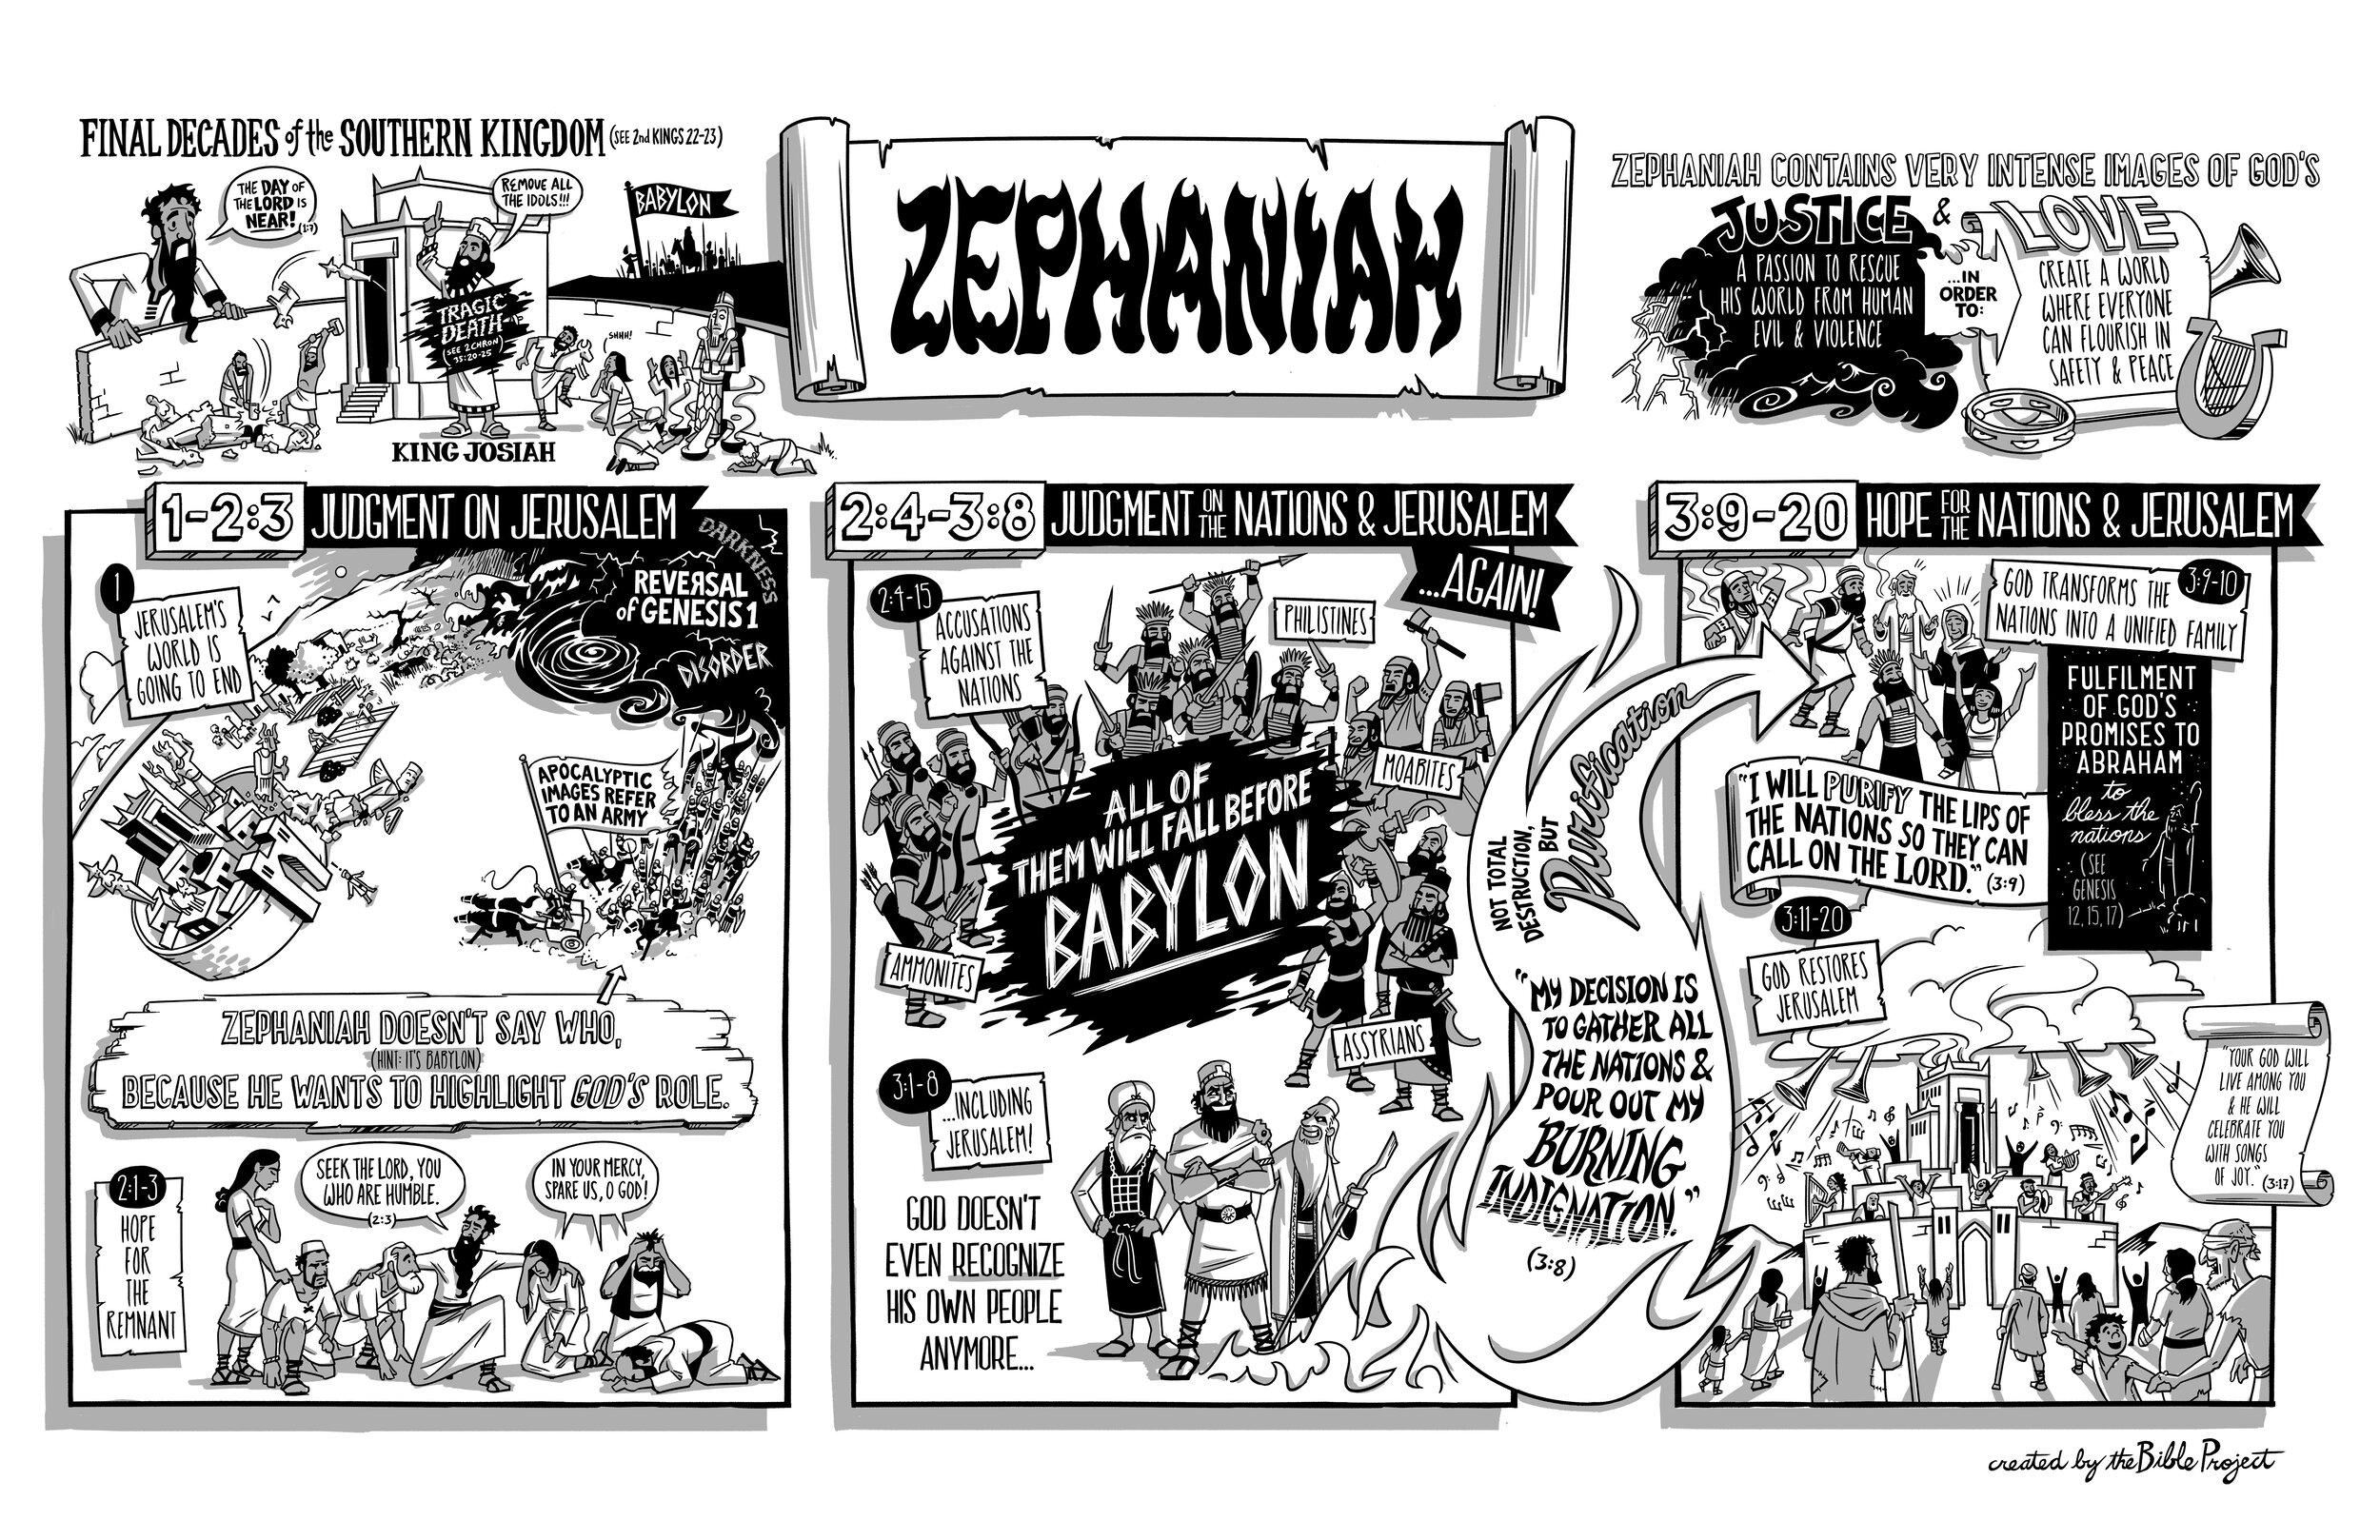 BibleProject: Zephaniah (Video)